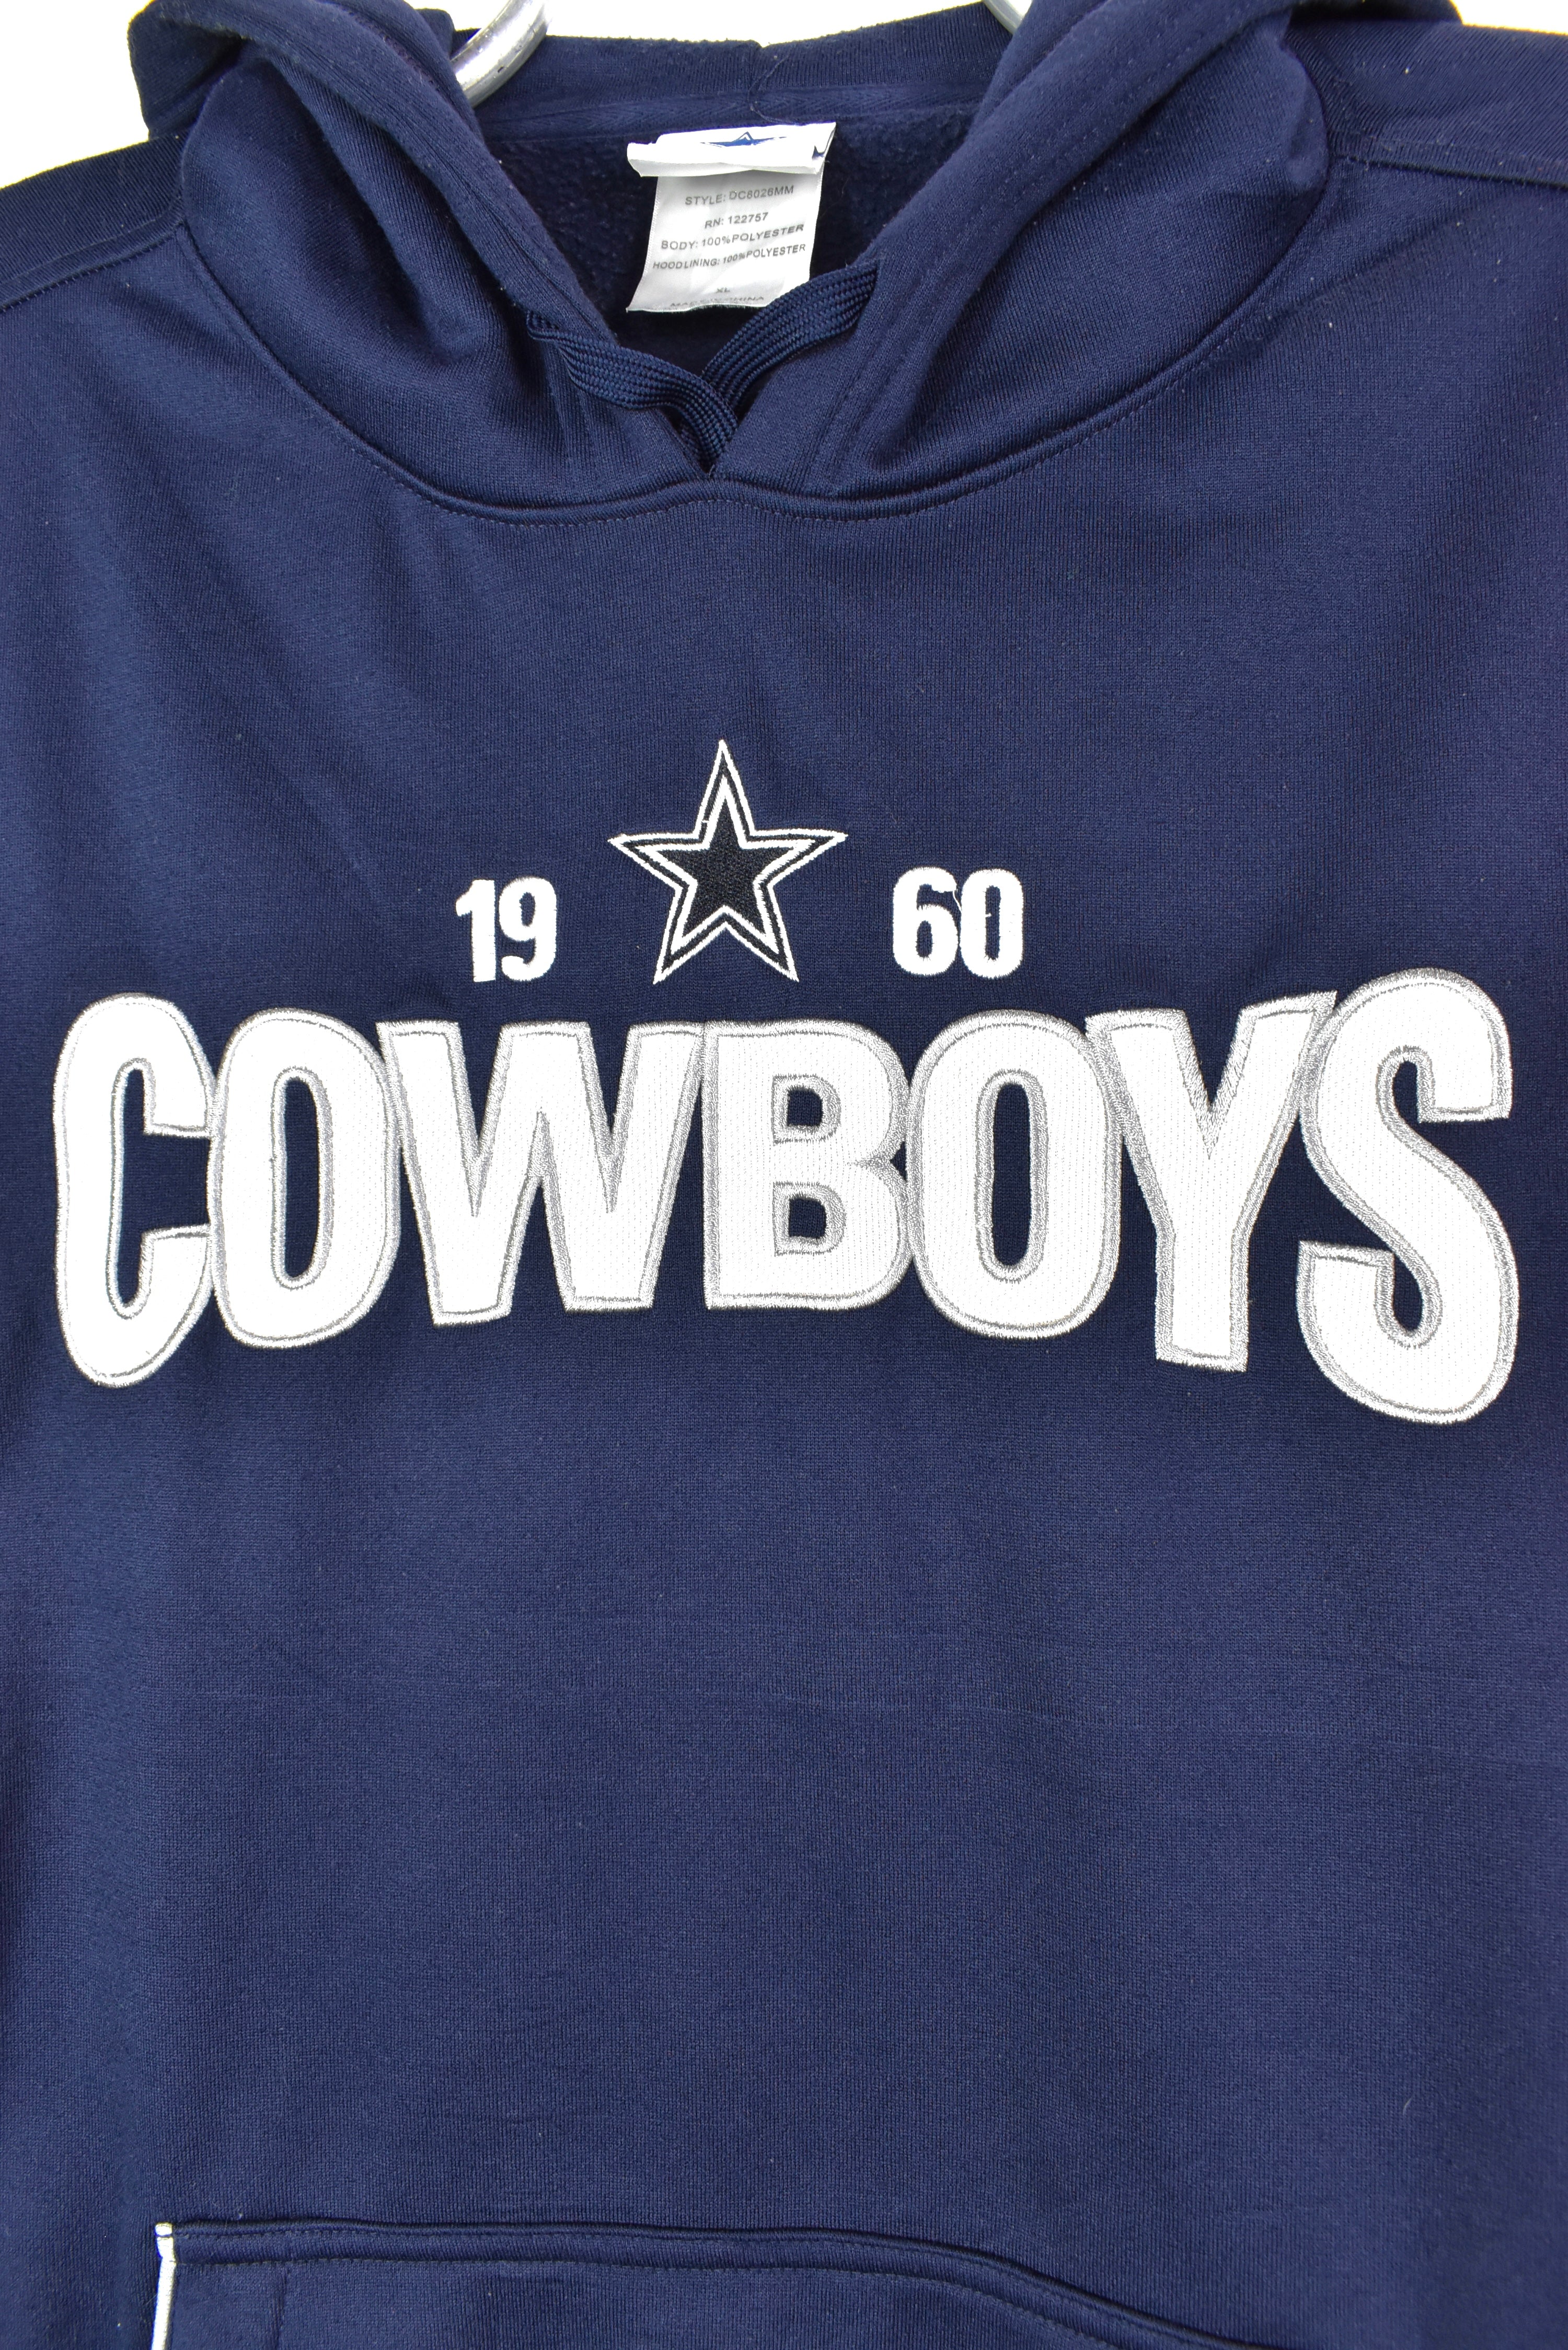 Modern Dallas Cowboys hoodie, NFL navy blue embroidered sweatshirt - AU XL